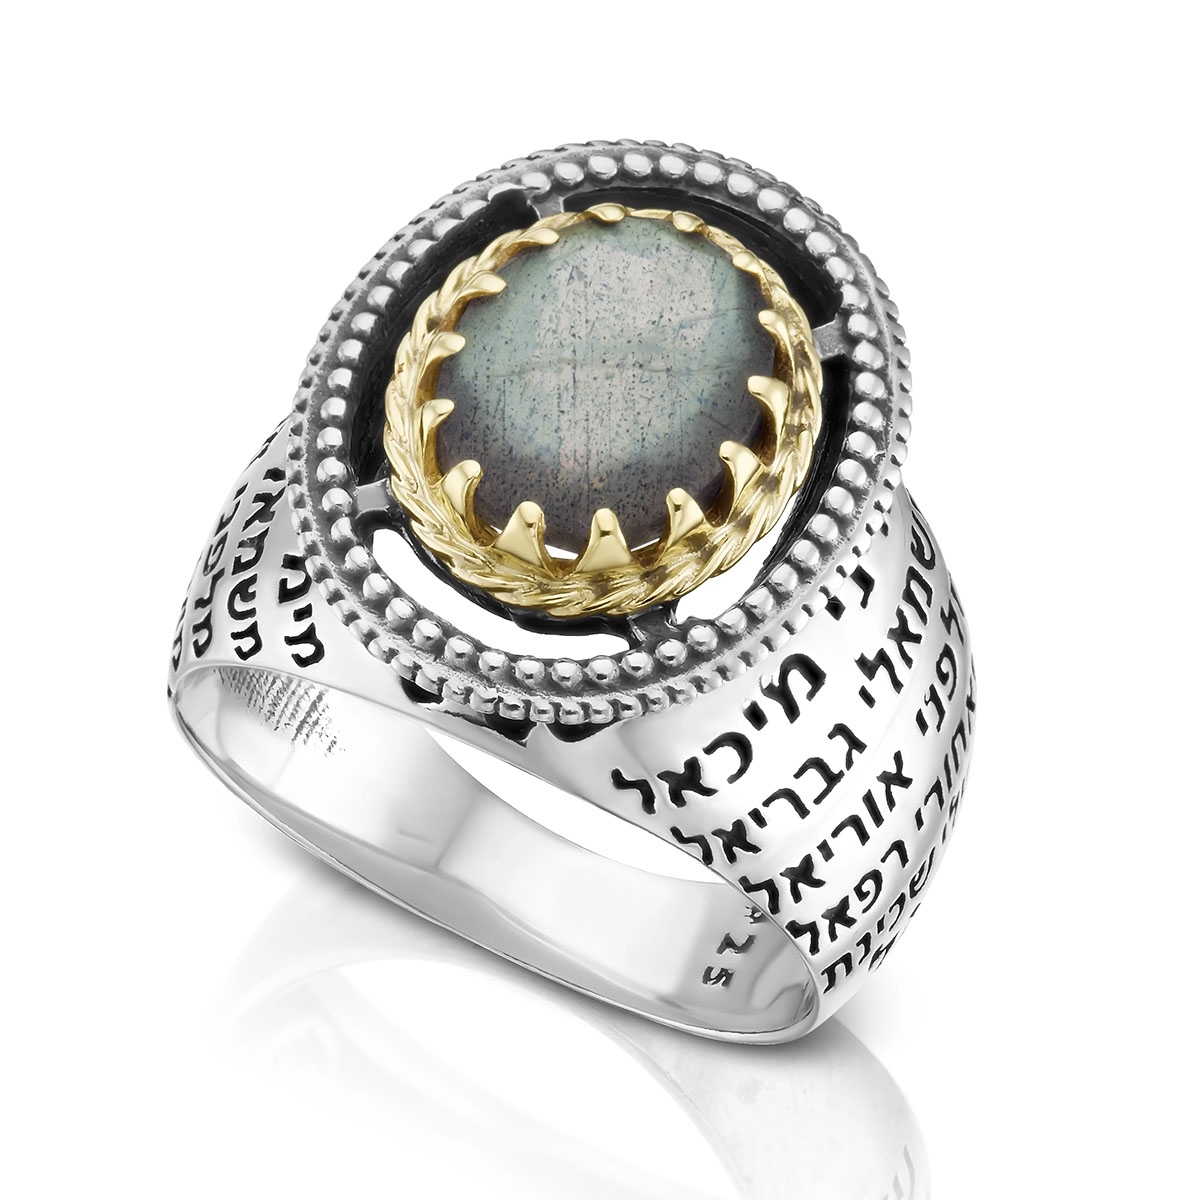 Angels' Names: Silver and Gold Kabbalah Ring with Labradorite Stone - 1